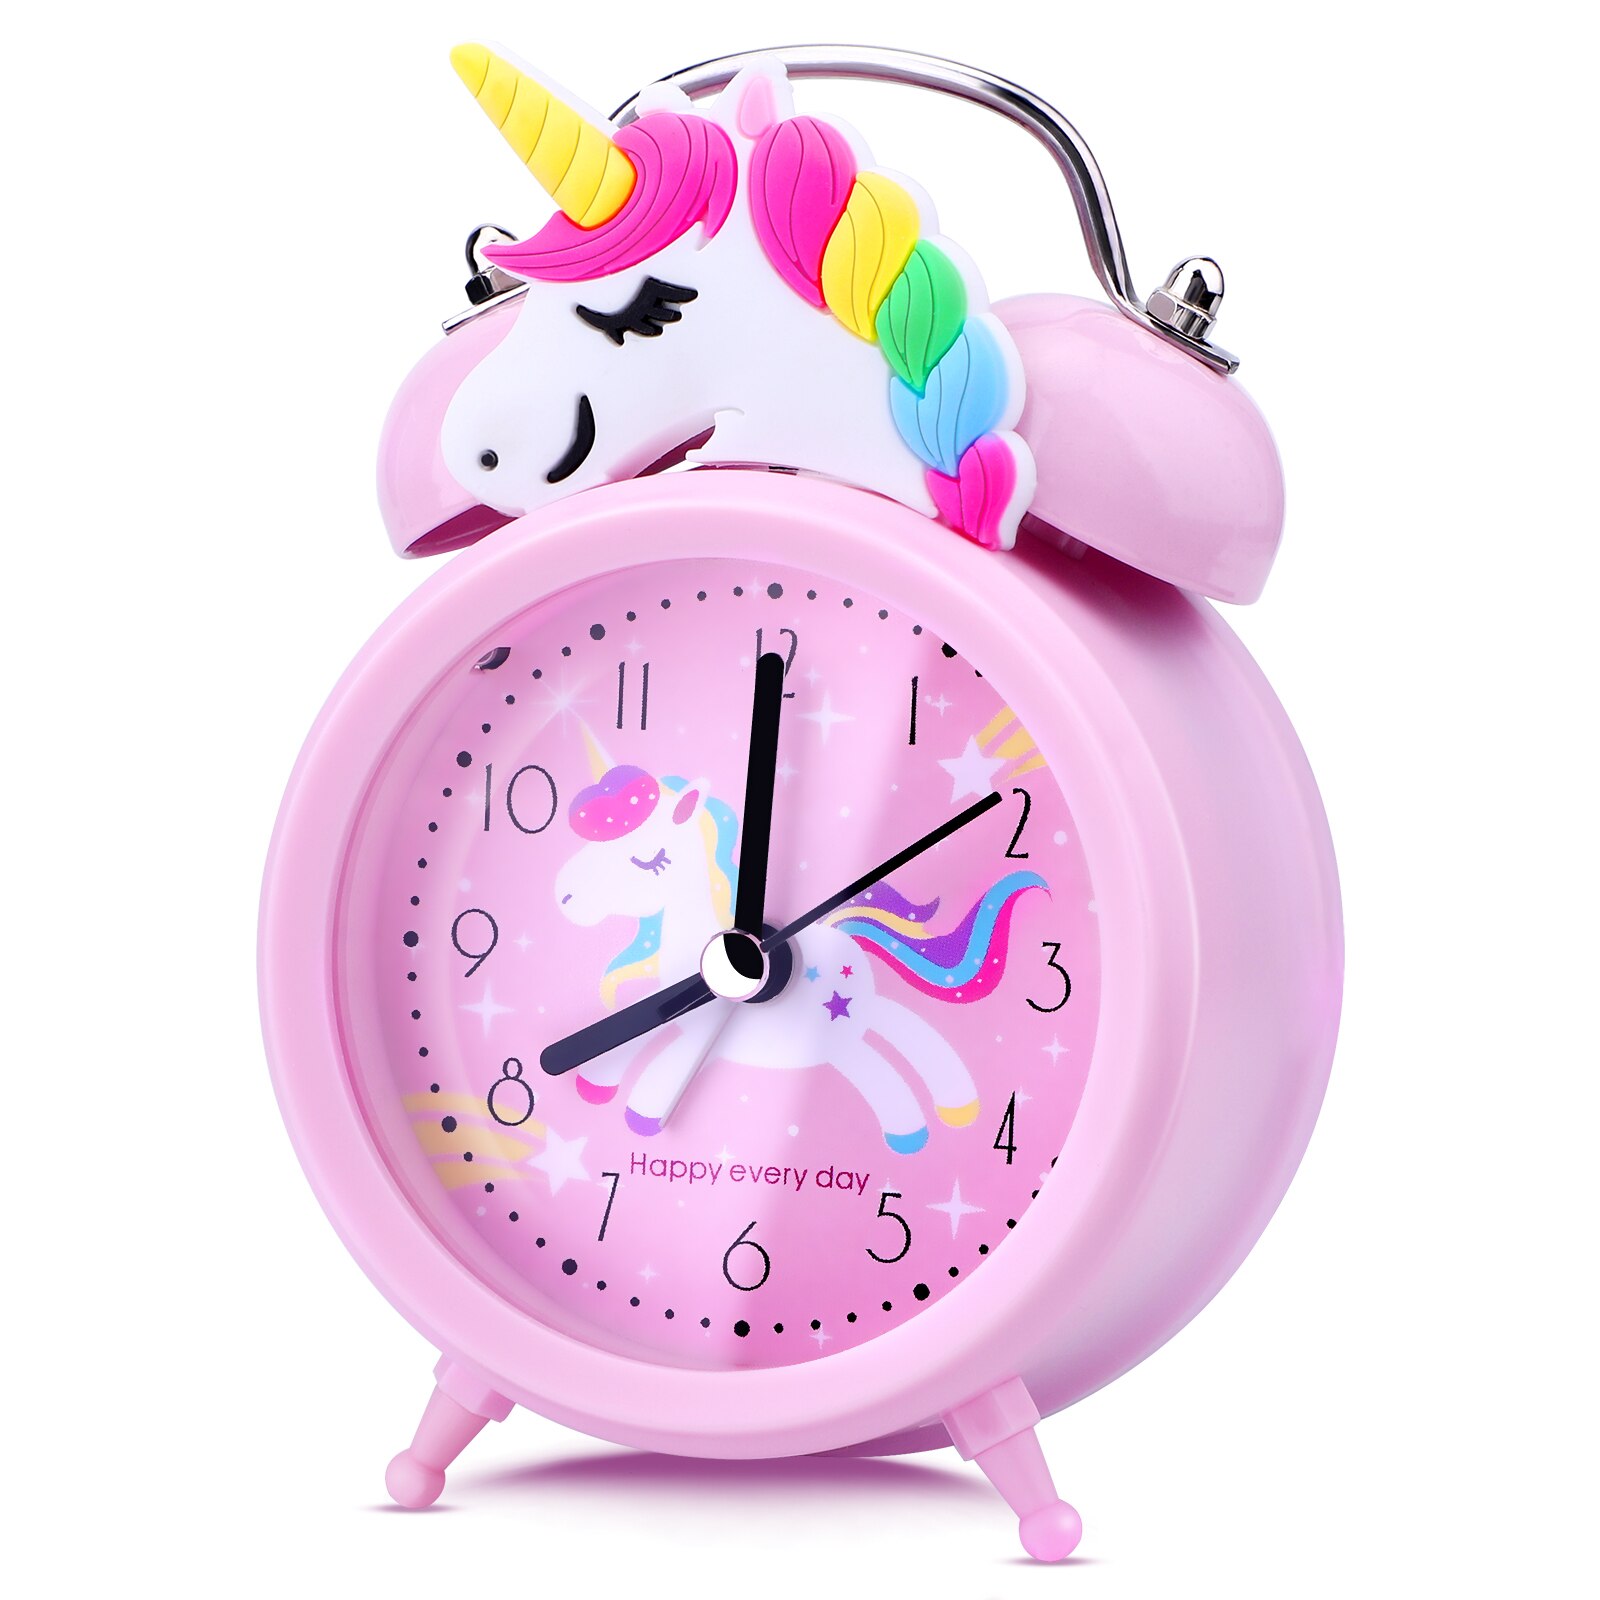 Unicorn kids alarm clock double bell clock with backlight cute desk clock home decoration будильник barn